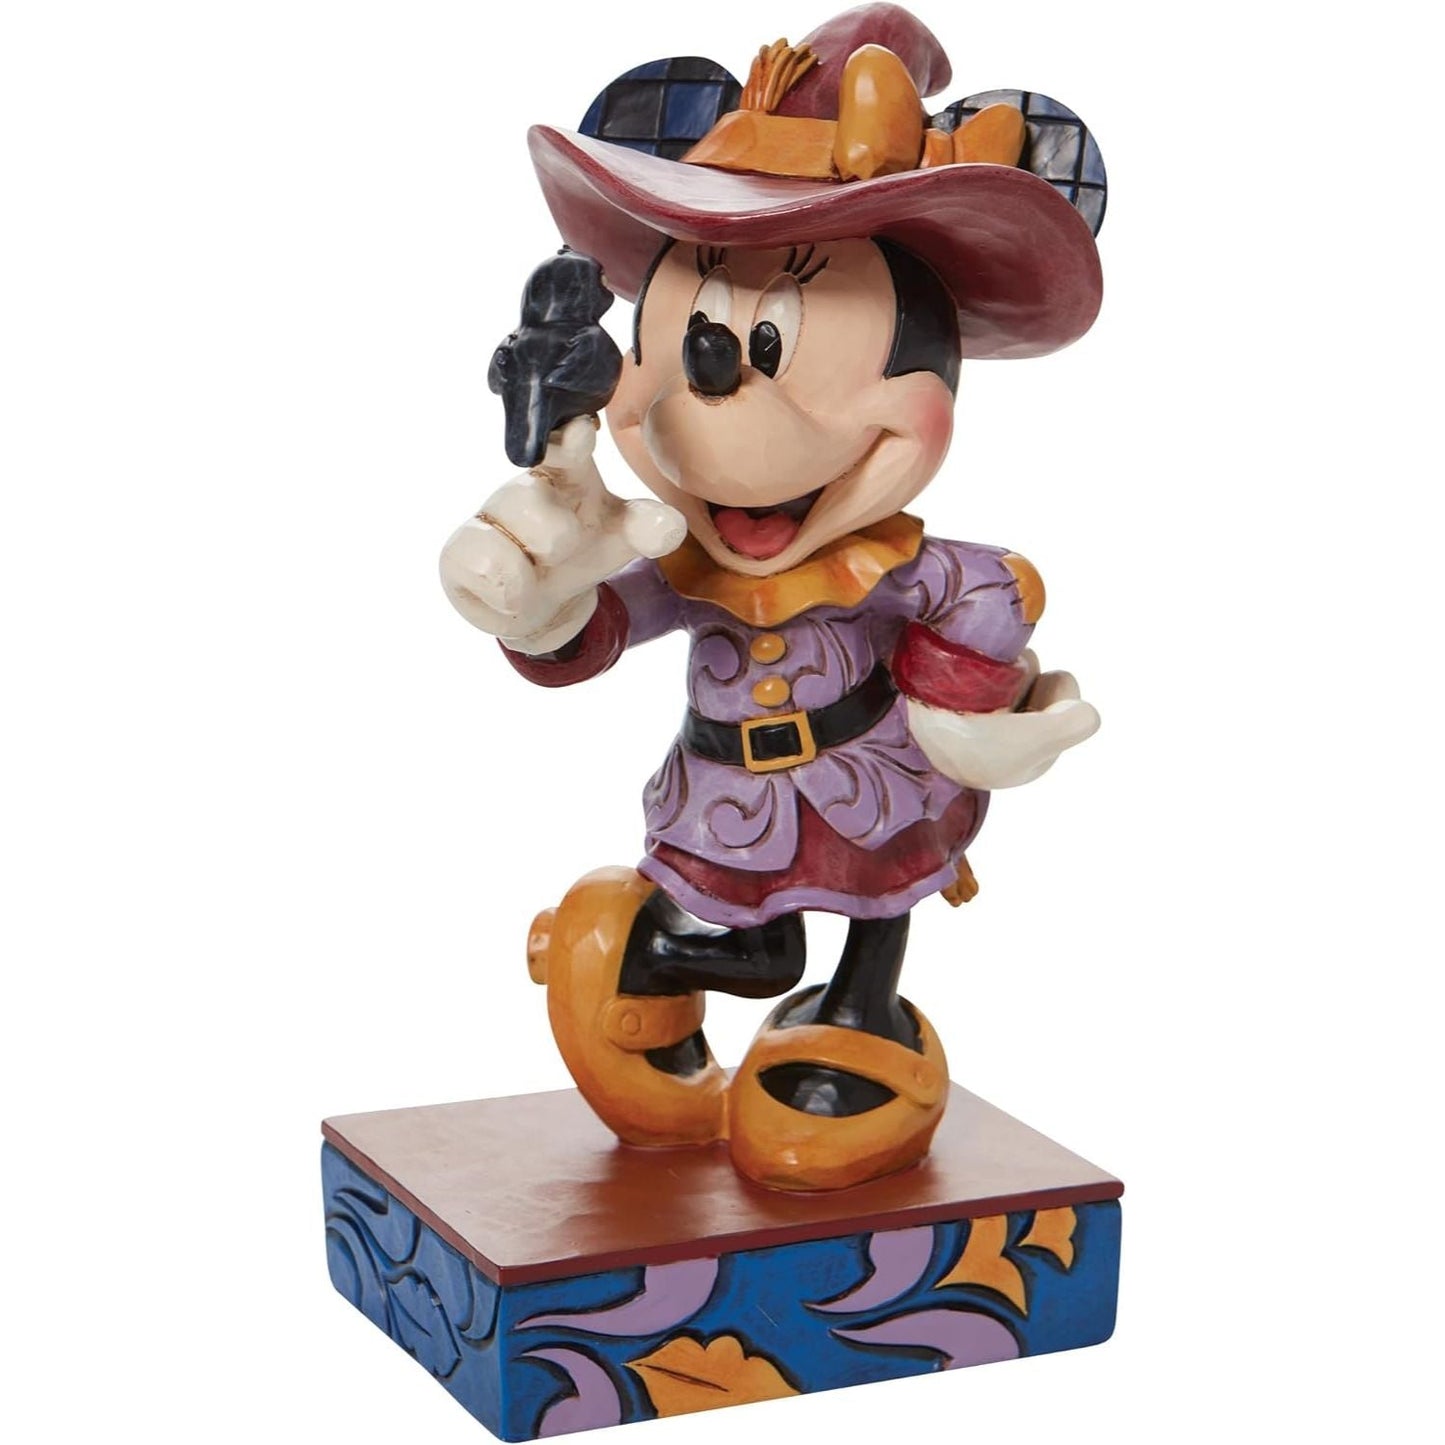 Jim Shore Disney Traditions Halloween Scarecrow Minnie Mouse Figurine, 6.5"